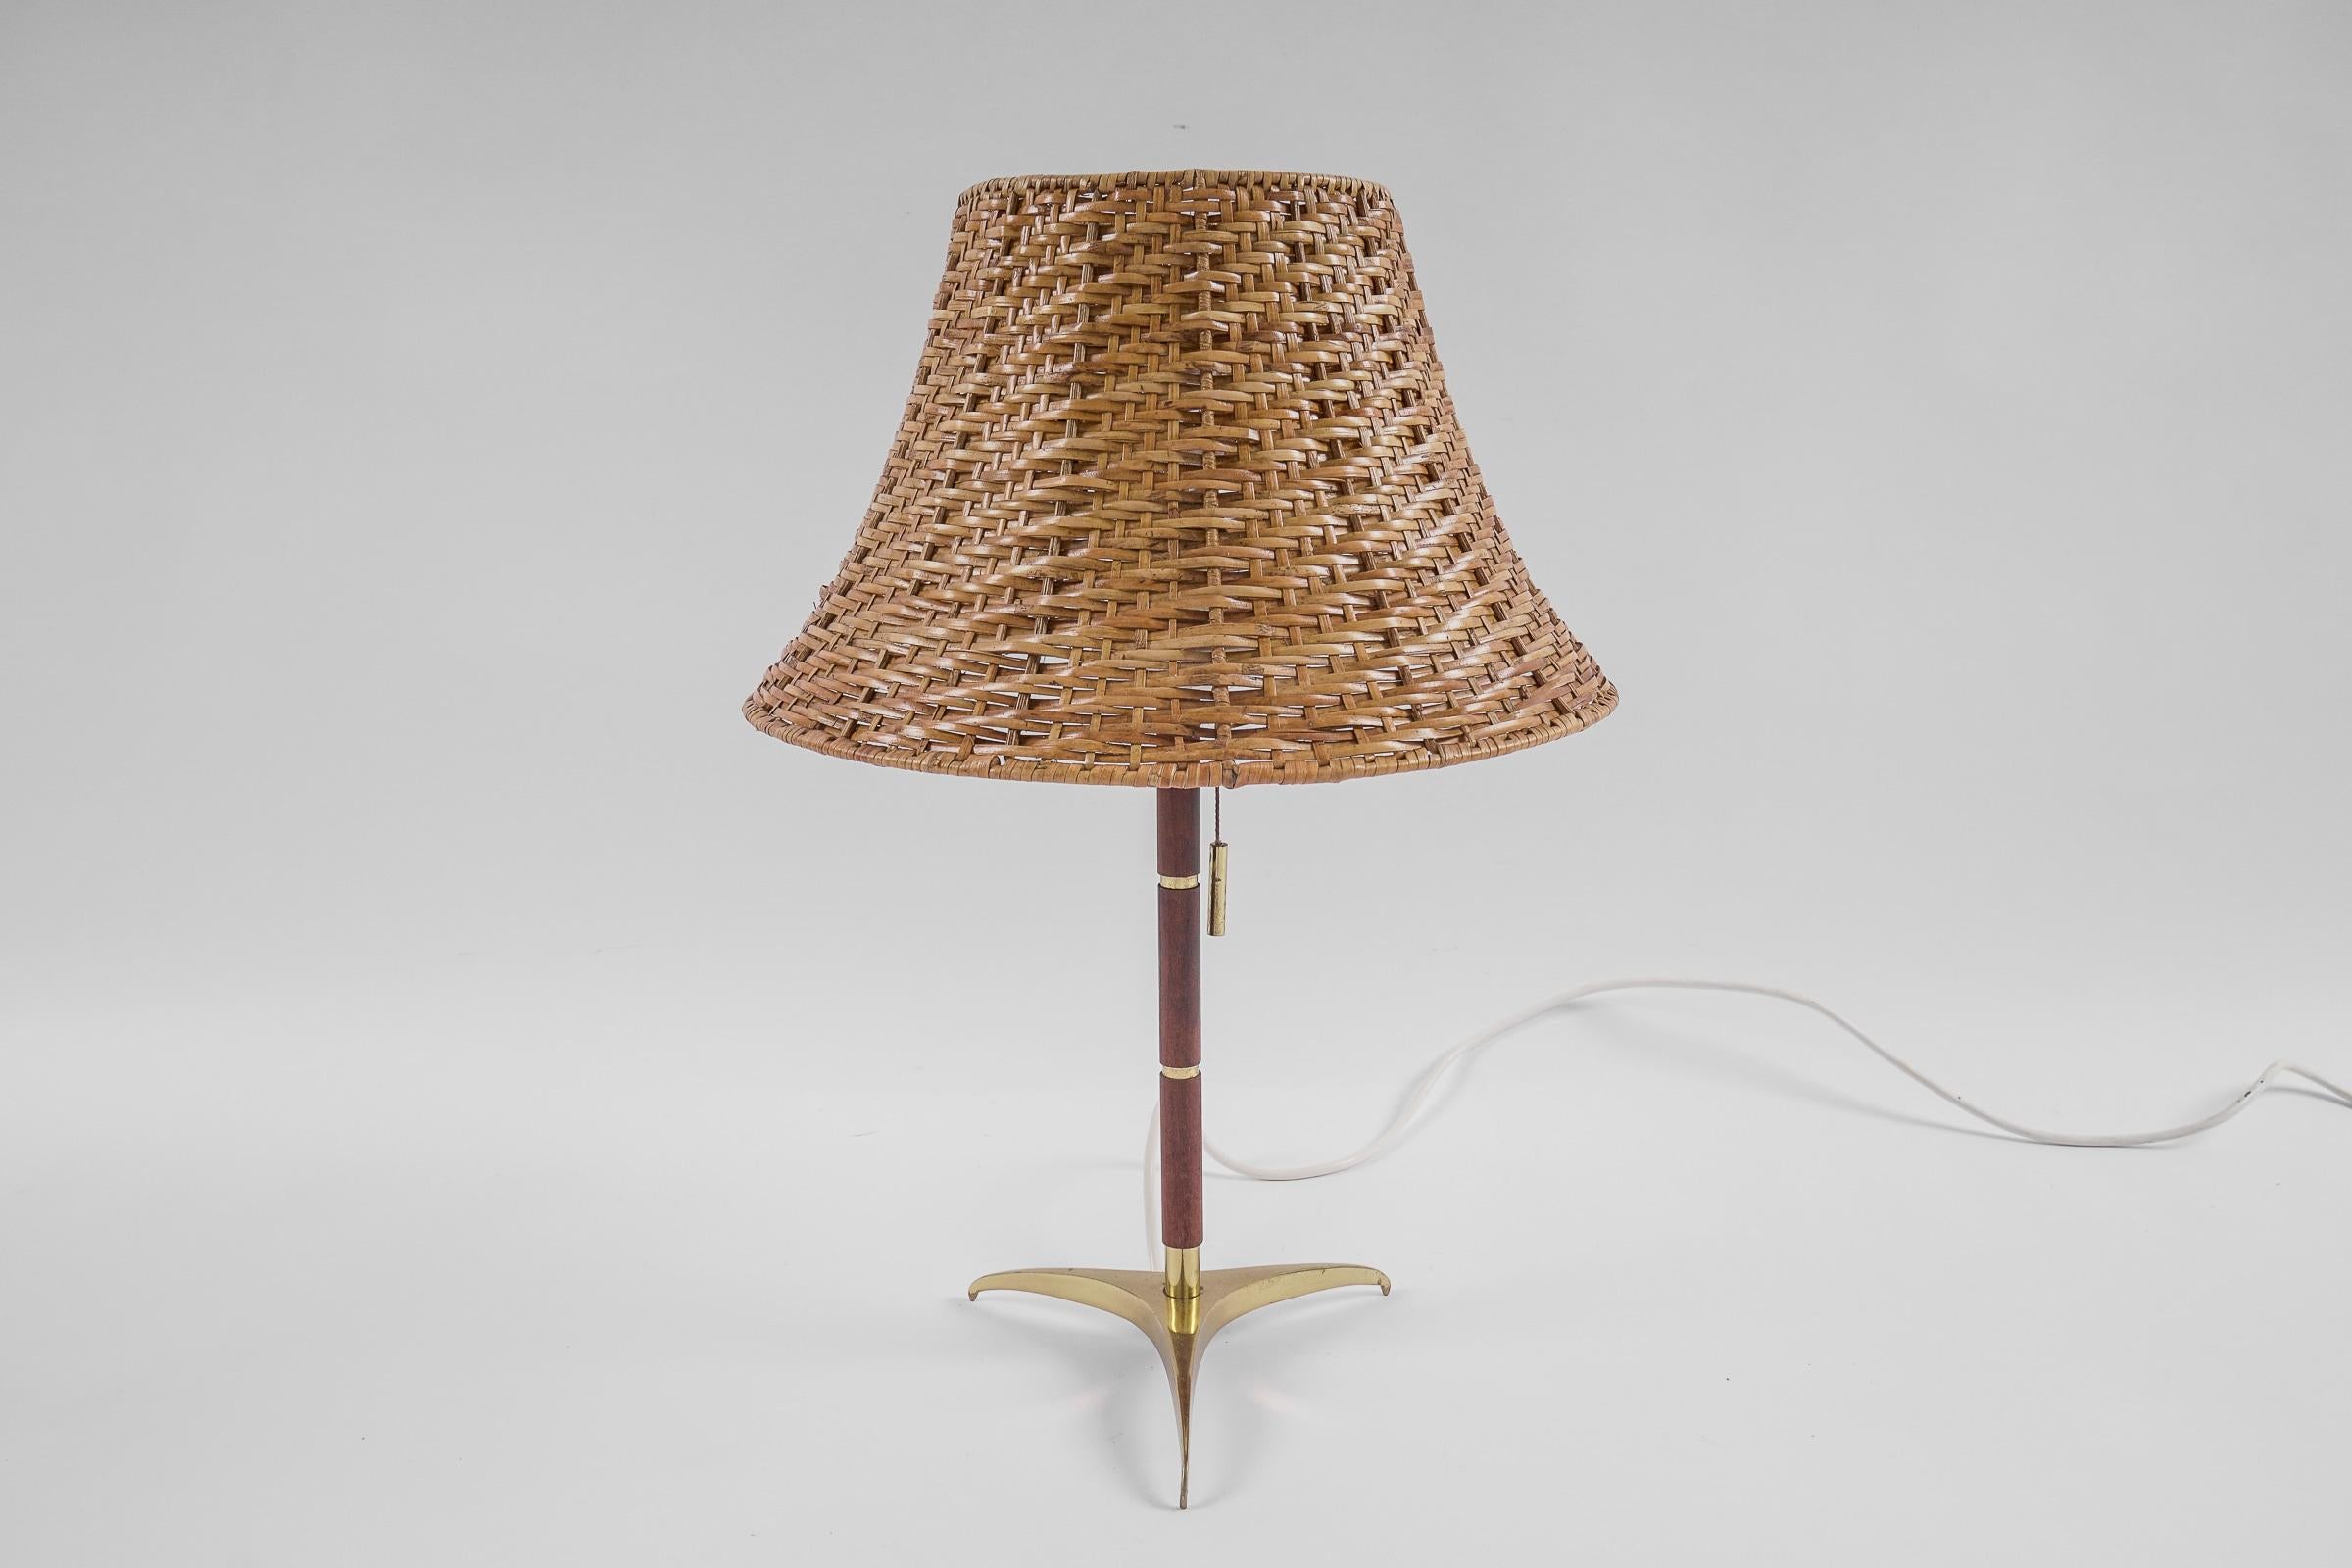 Austrian Lovely Mid-Century Modern Table Lamp in Brass, Wicker and Teak, 1950s, Austria For Sale